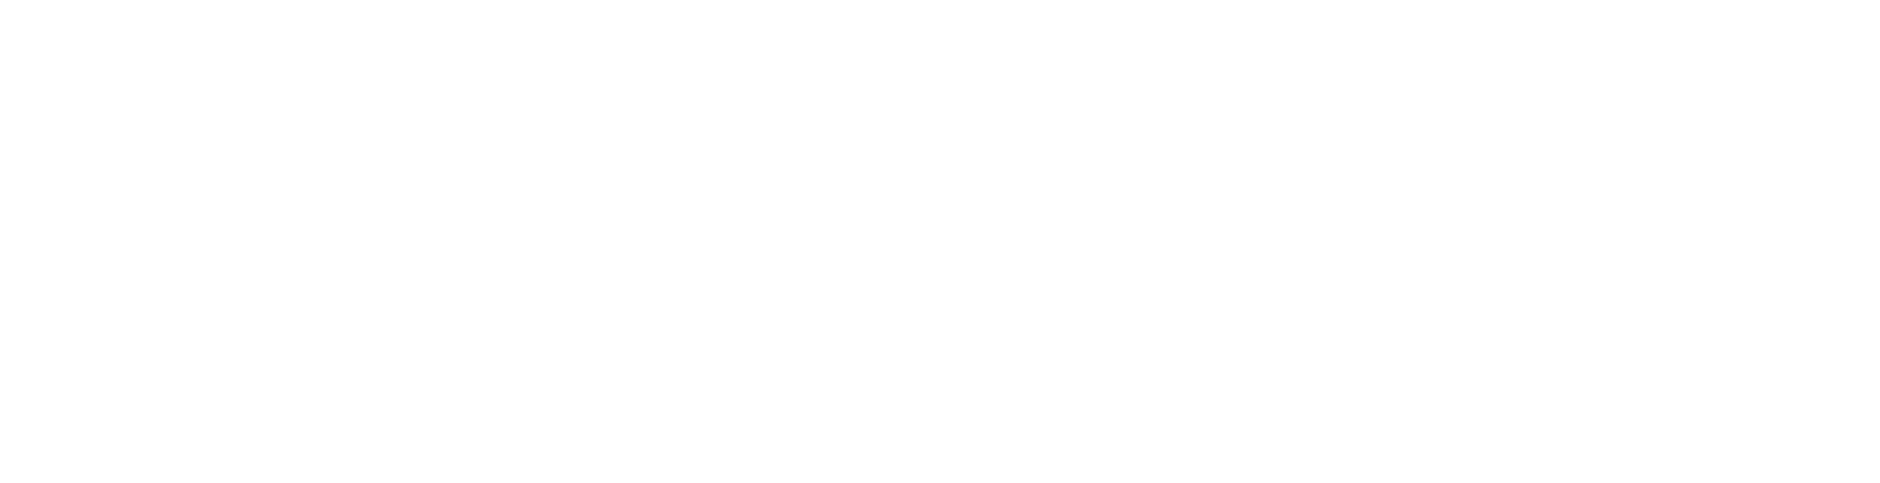 PCNZ-Logo-White